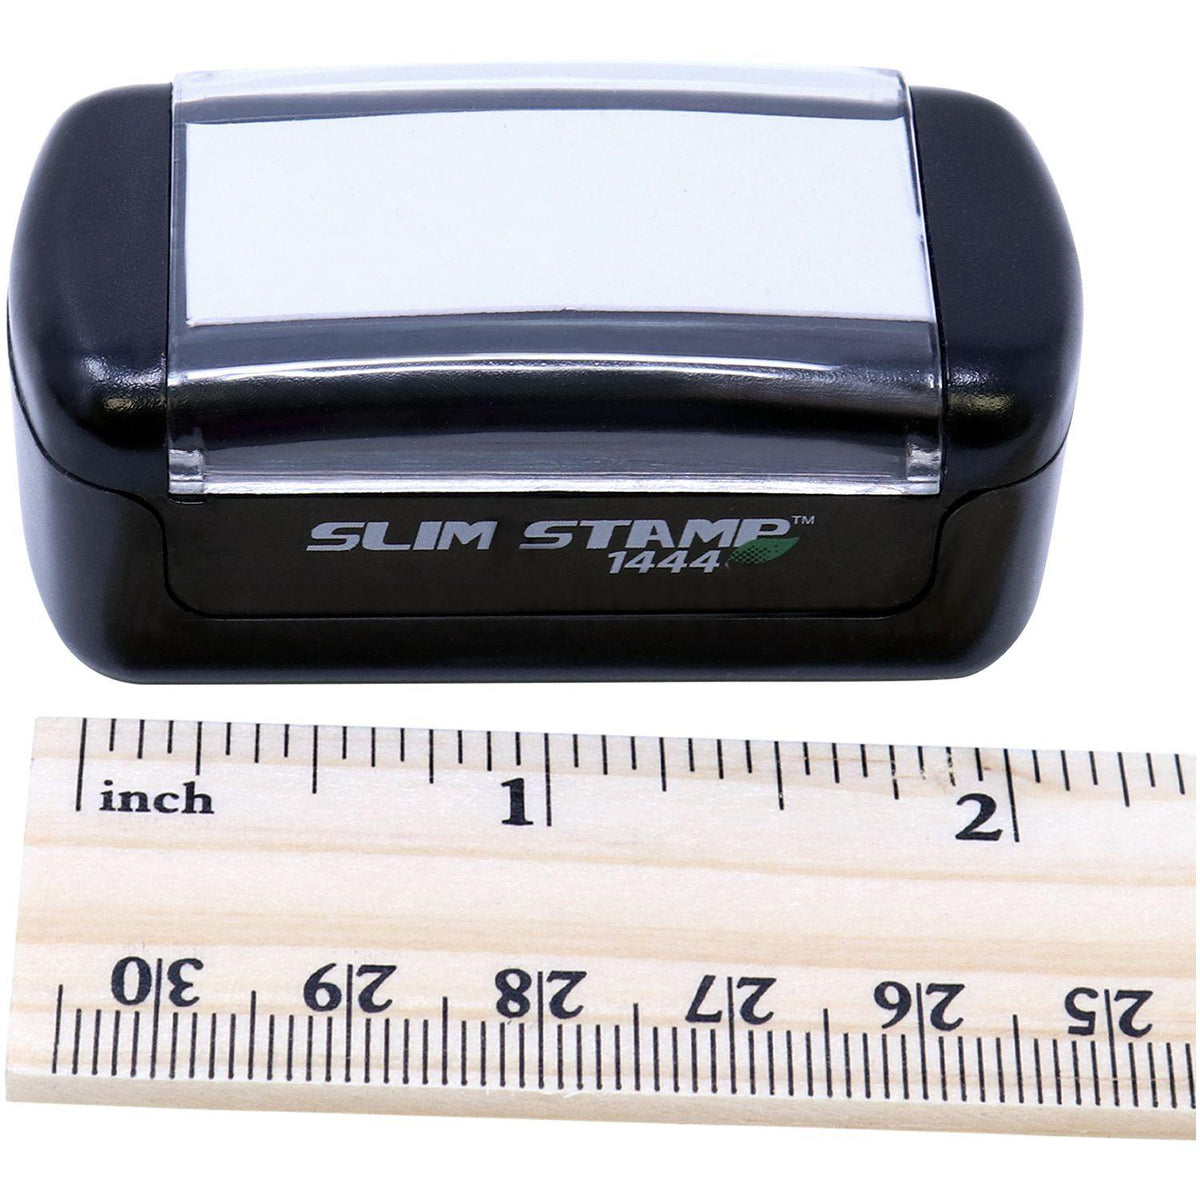 Measurement Slim Pre-Inked Shadow Copy Stamp with Ruler